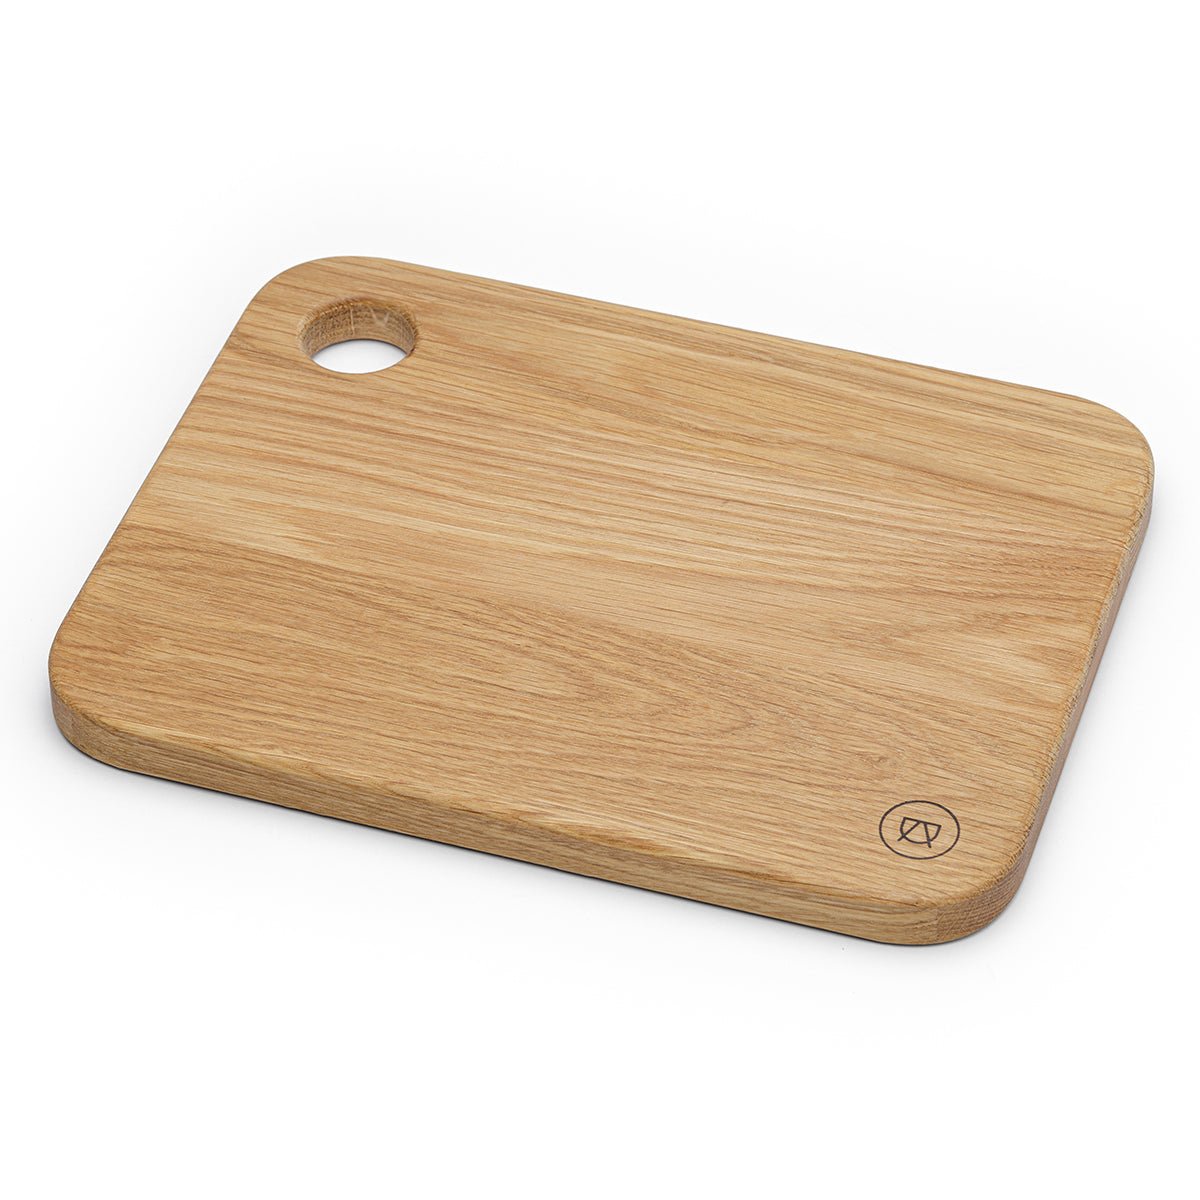 Elegant “Ei-Pad” cutting board made of oak wood